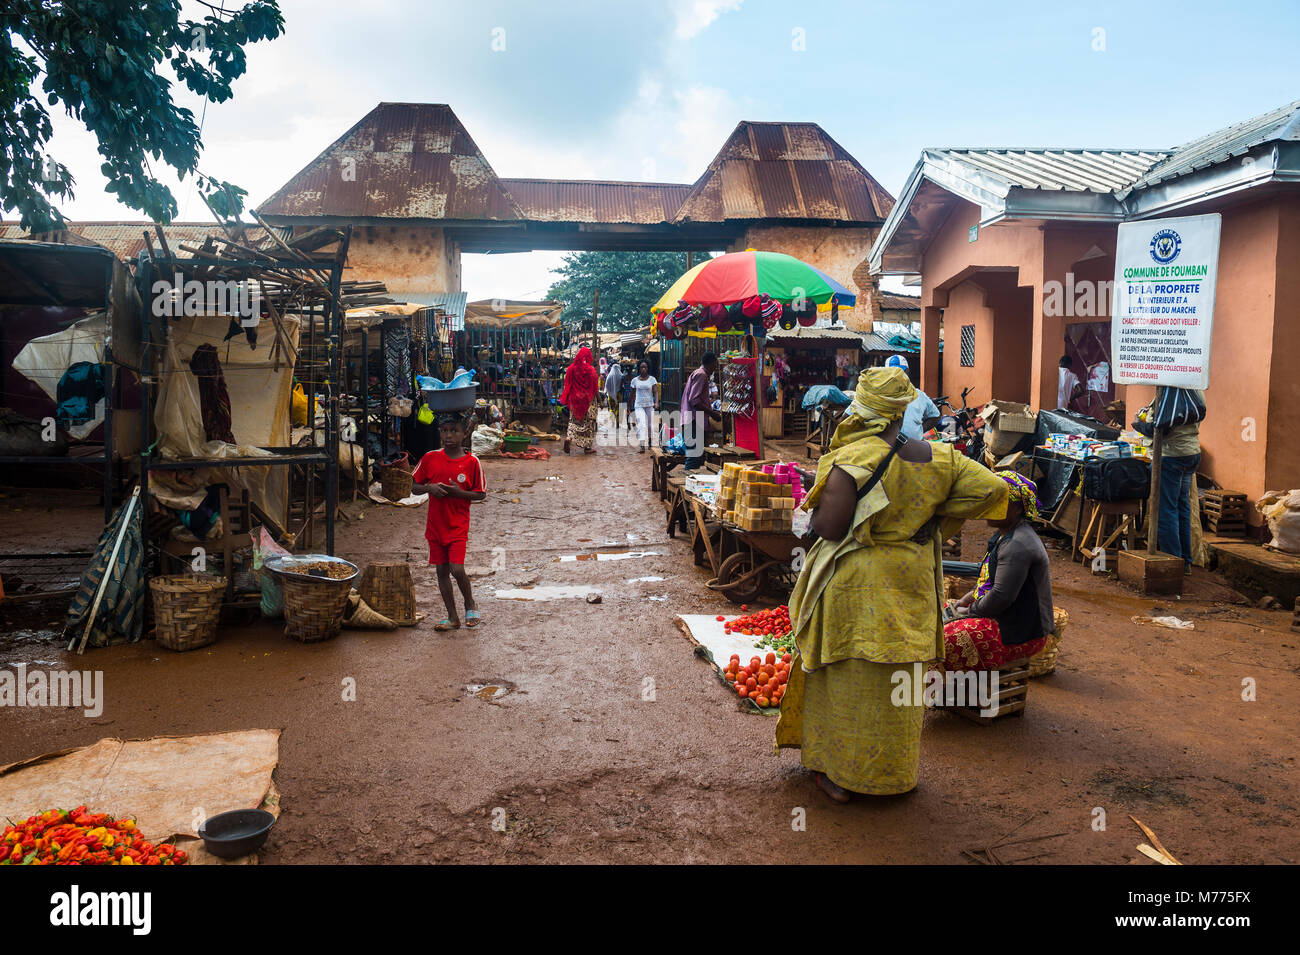 Market in Foumban, Cameroon, Africa Stock Photo